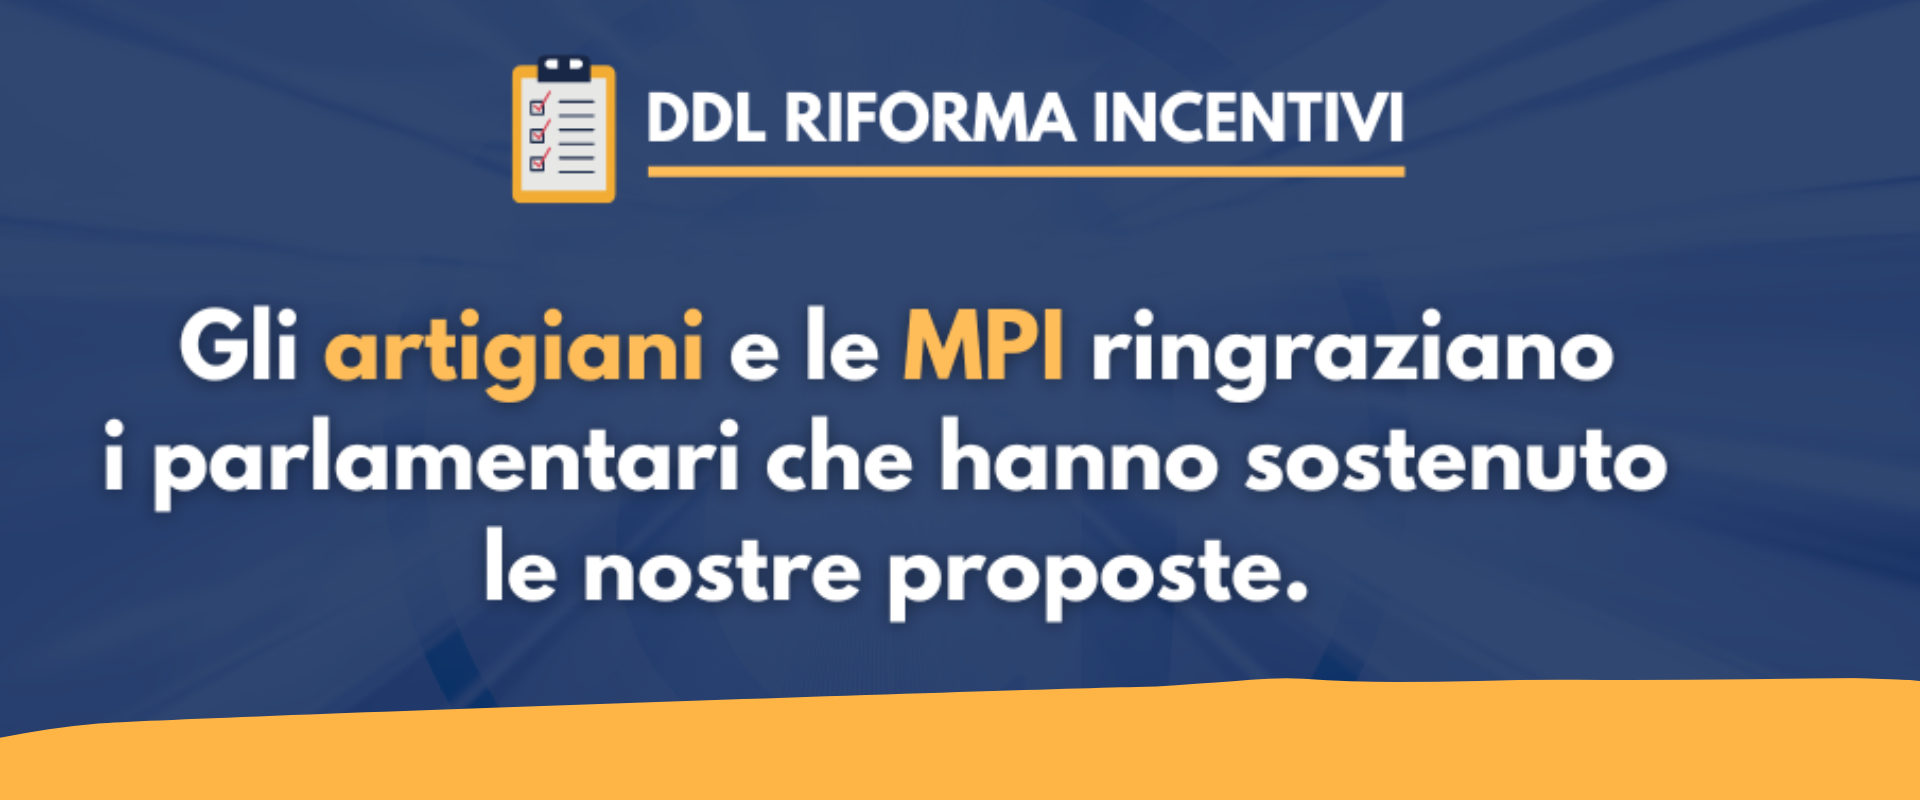 DDL Riforma incentivi